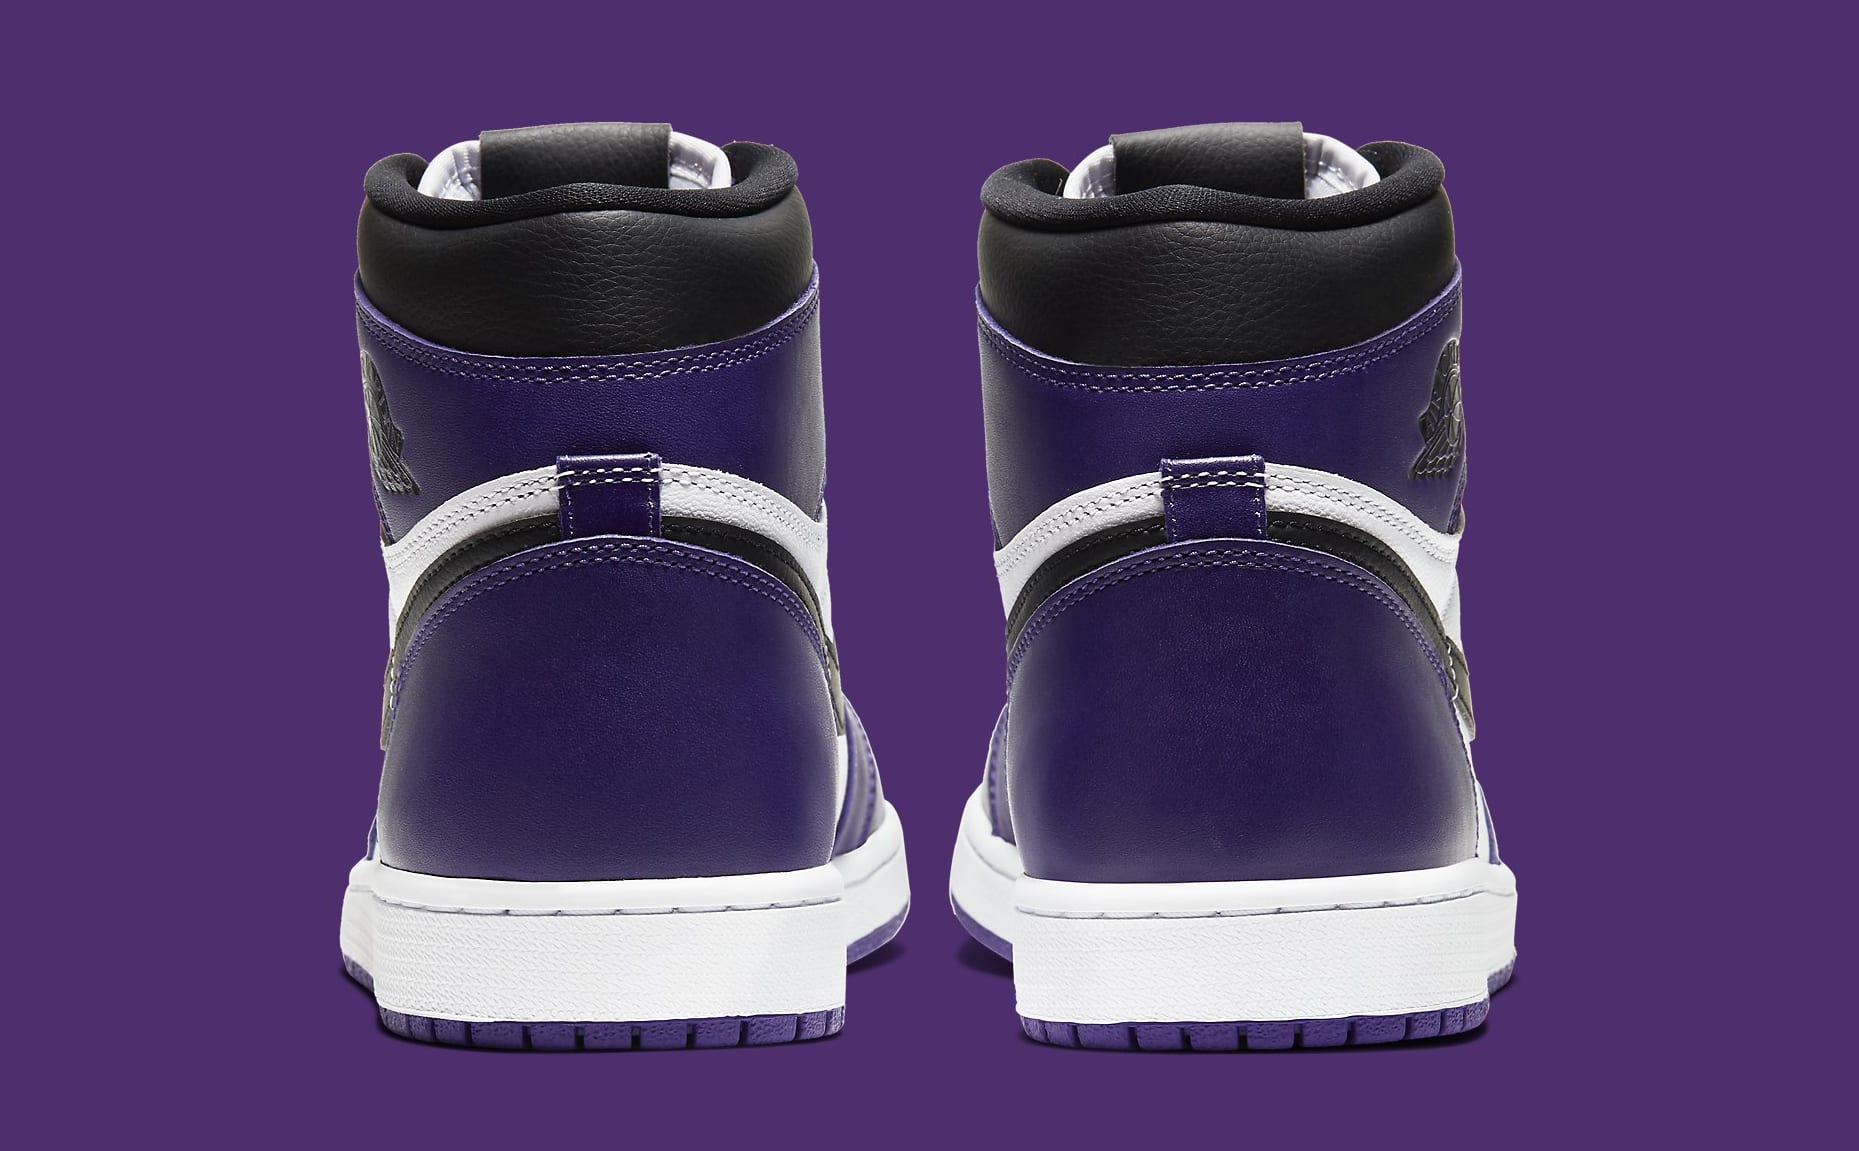 Air Jordan 1 High OG &quot;Court Purple&quot; Coming Soon: Official Images